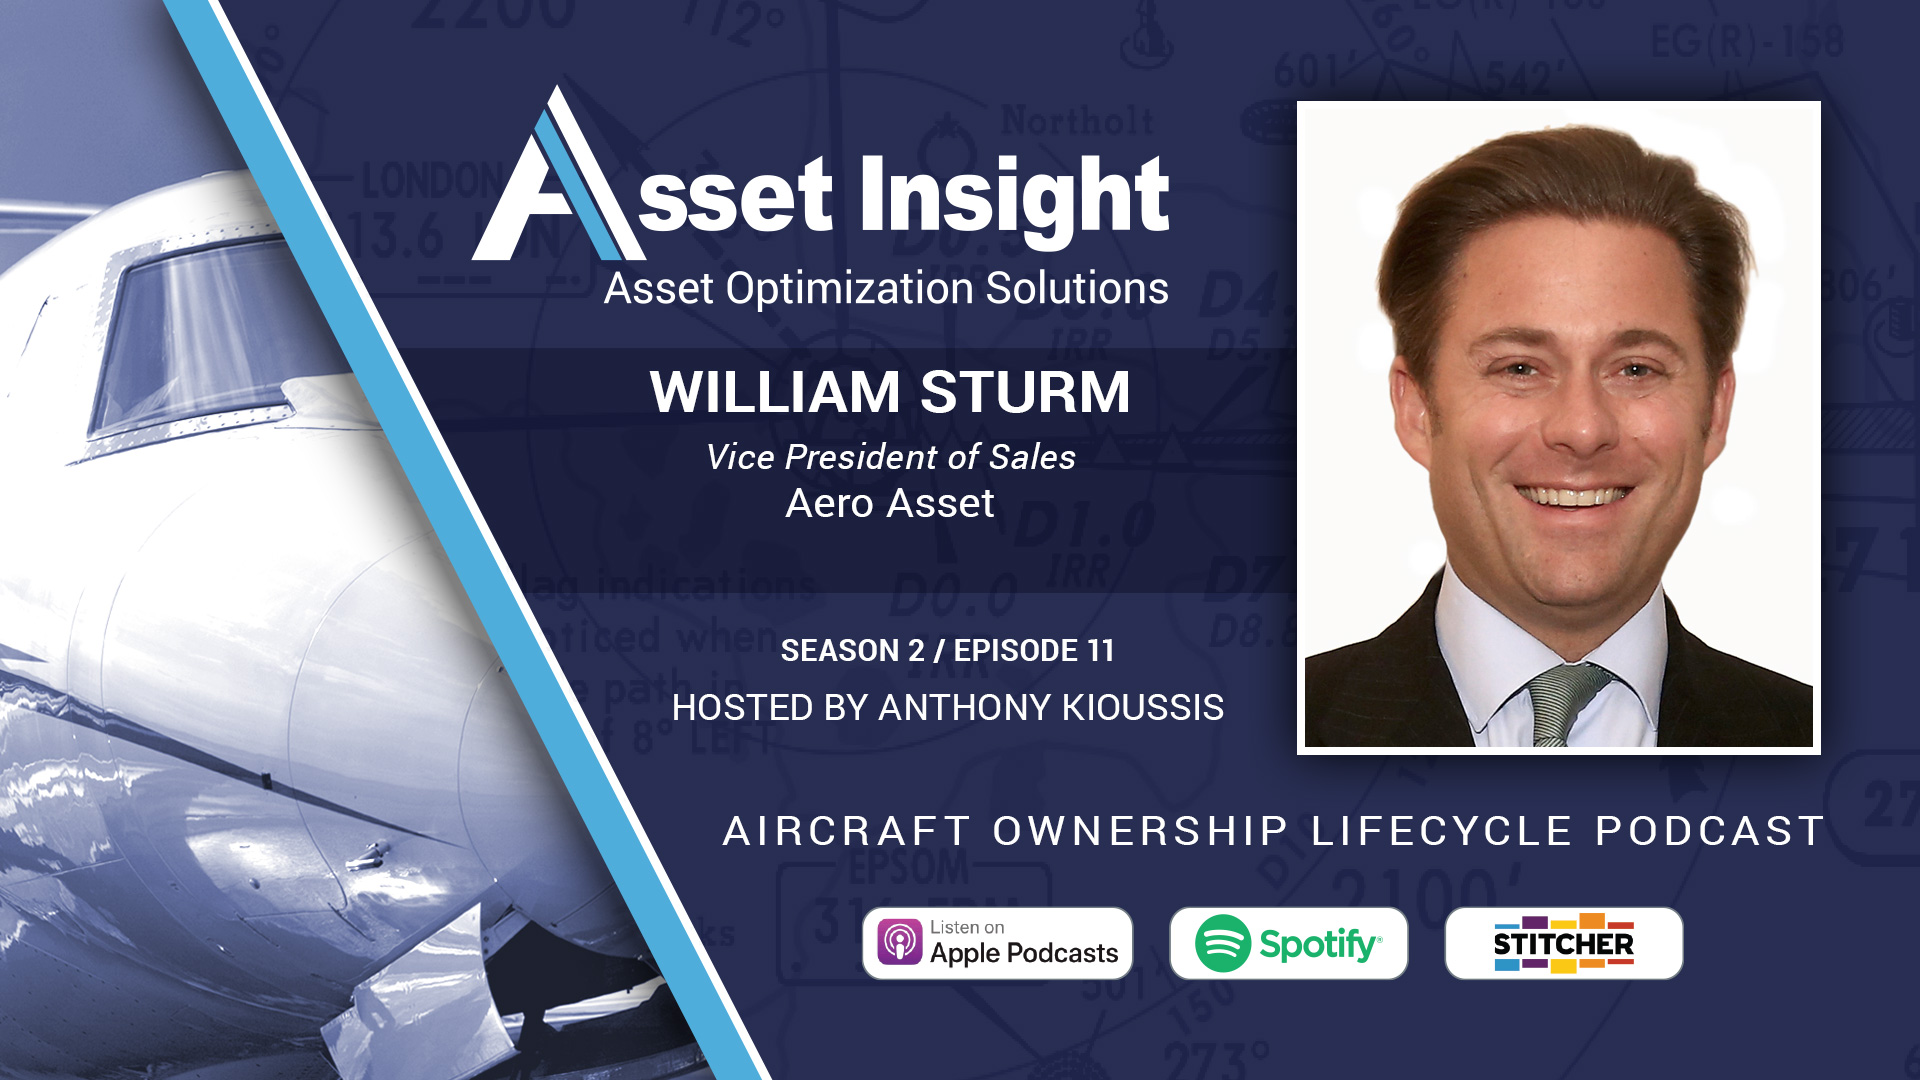 William Sturm, Vice President of Sales for Aero Asset